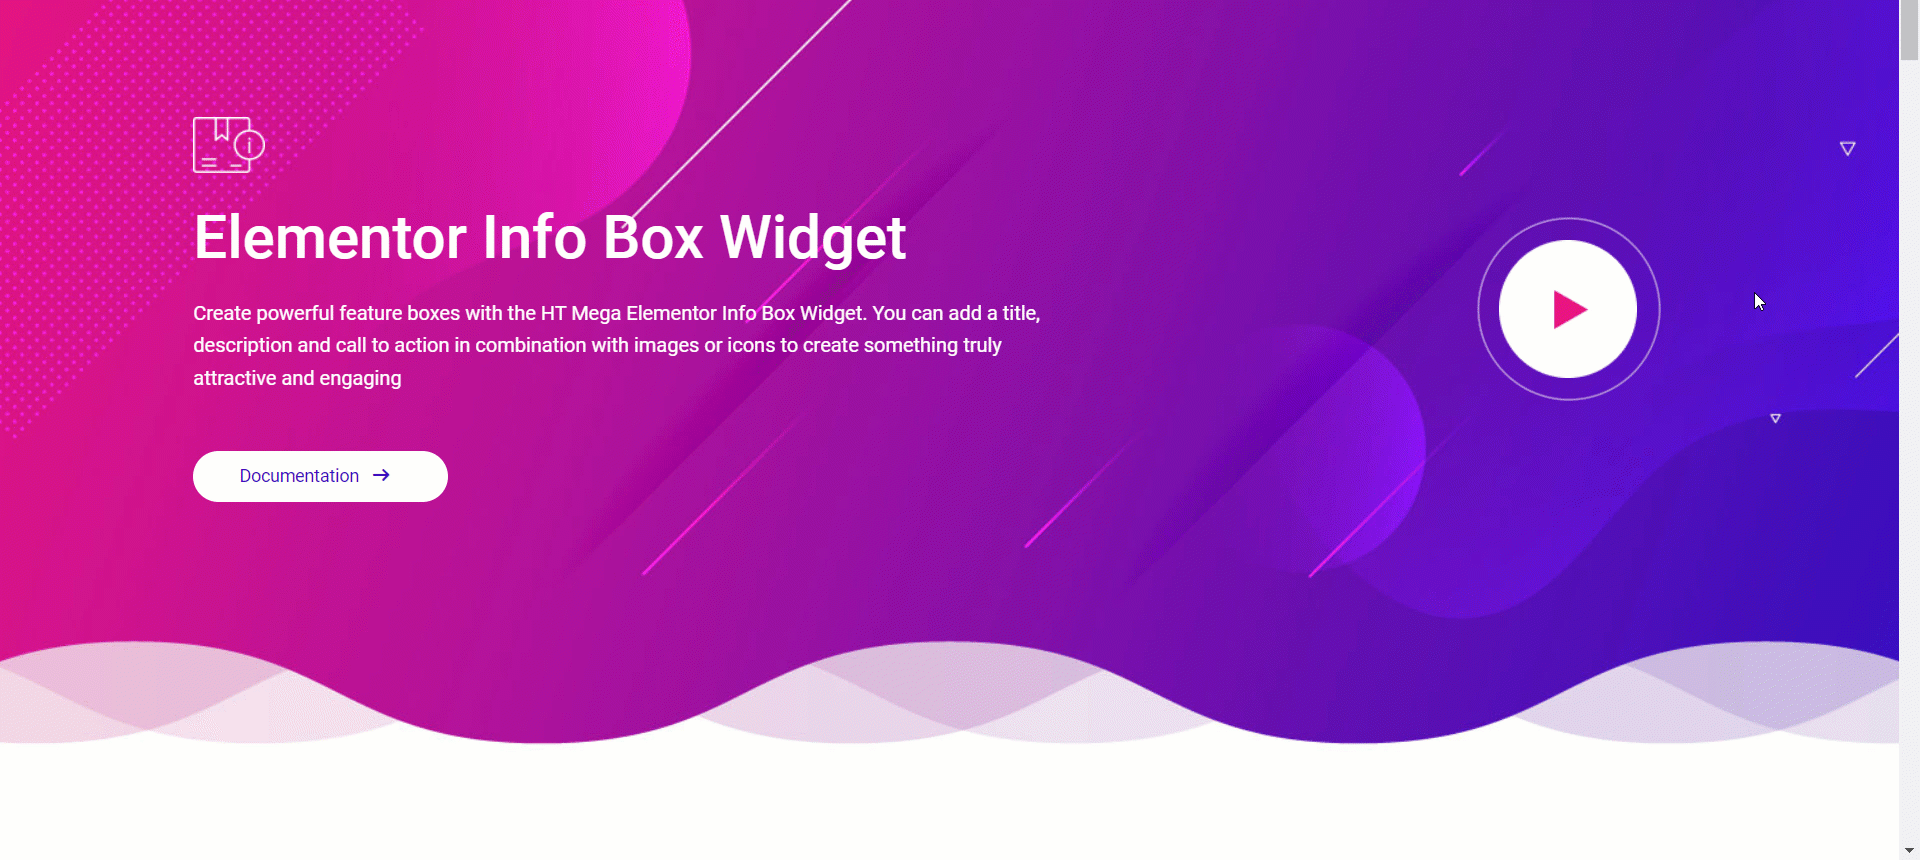 Elementor Info Box Widget